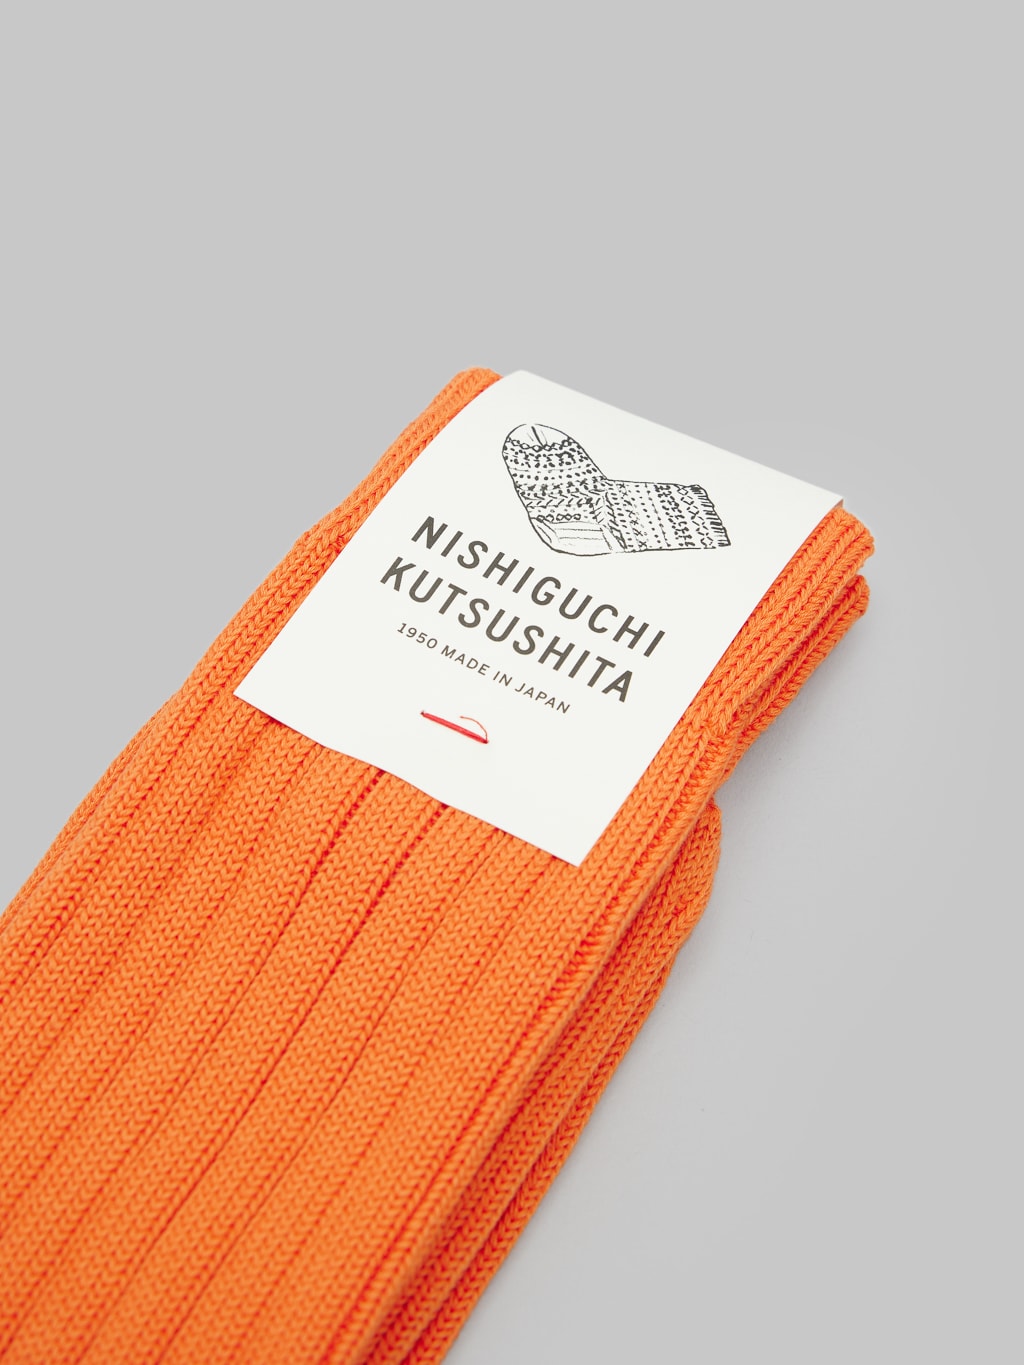 nishiguchi kutsushita egyptian cotton ribbed socks apricot orange front label